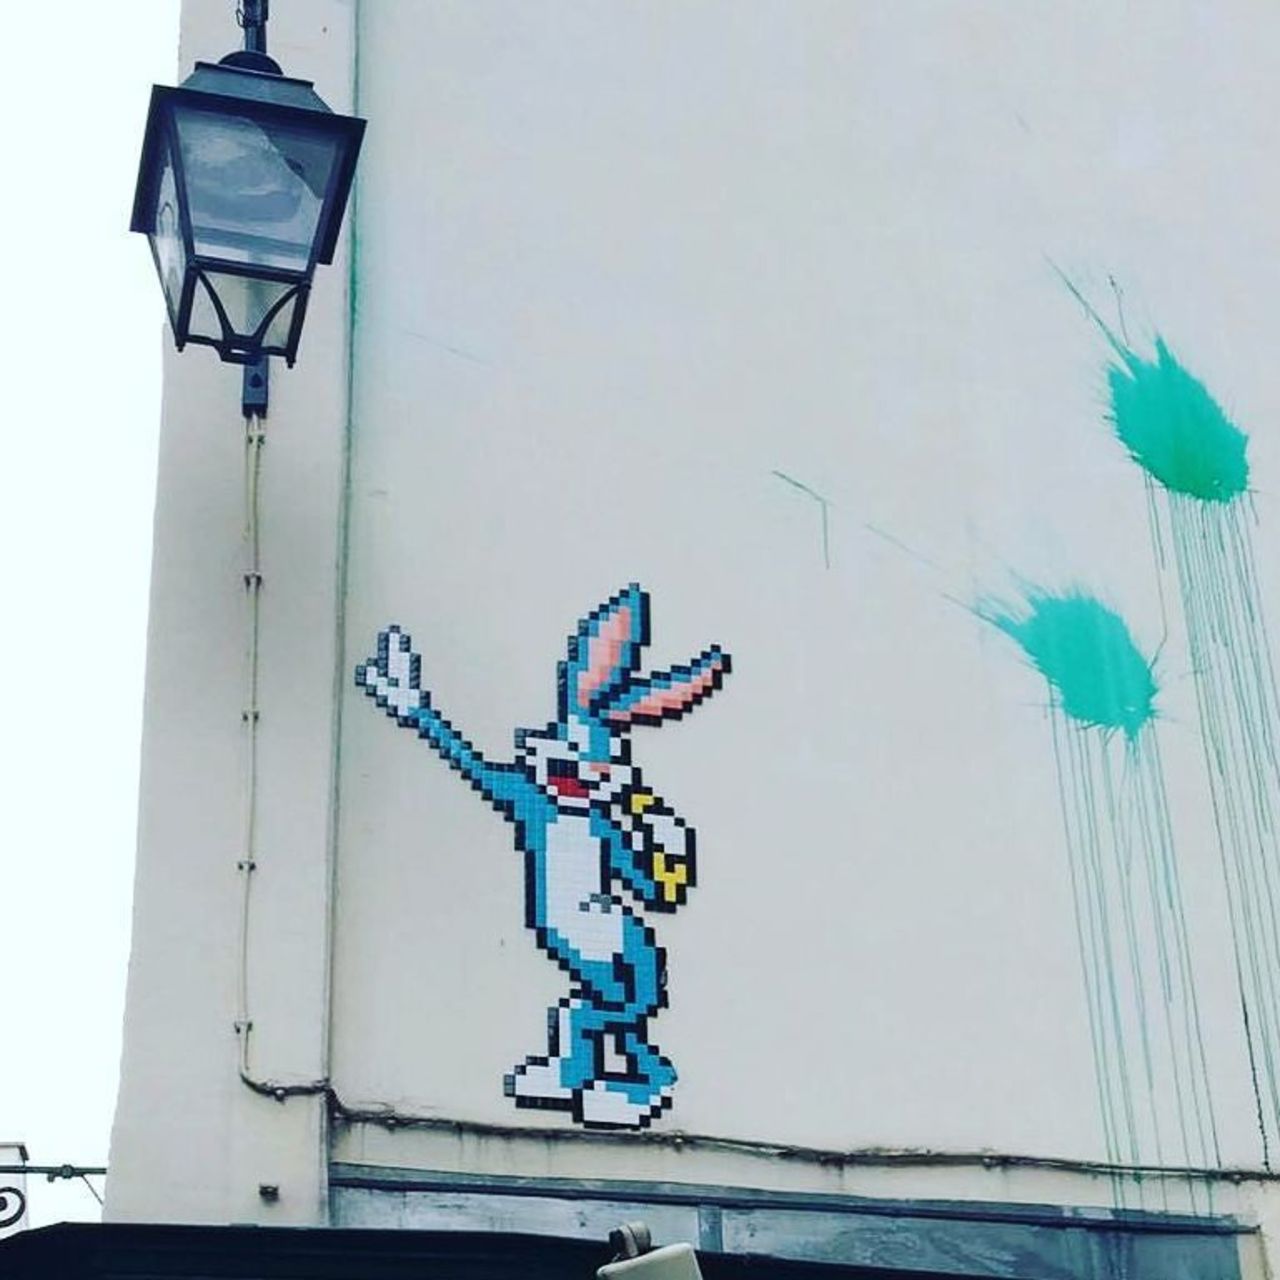 RT @StArtEverywhere: #bugsbunny in #Paris #banana #8bit #streetart  #art #graffiti #streetartparis #France #urbanart #warnerbros by babb… https://t.co/p5ZxsfNto0